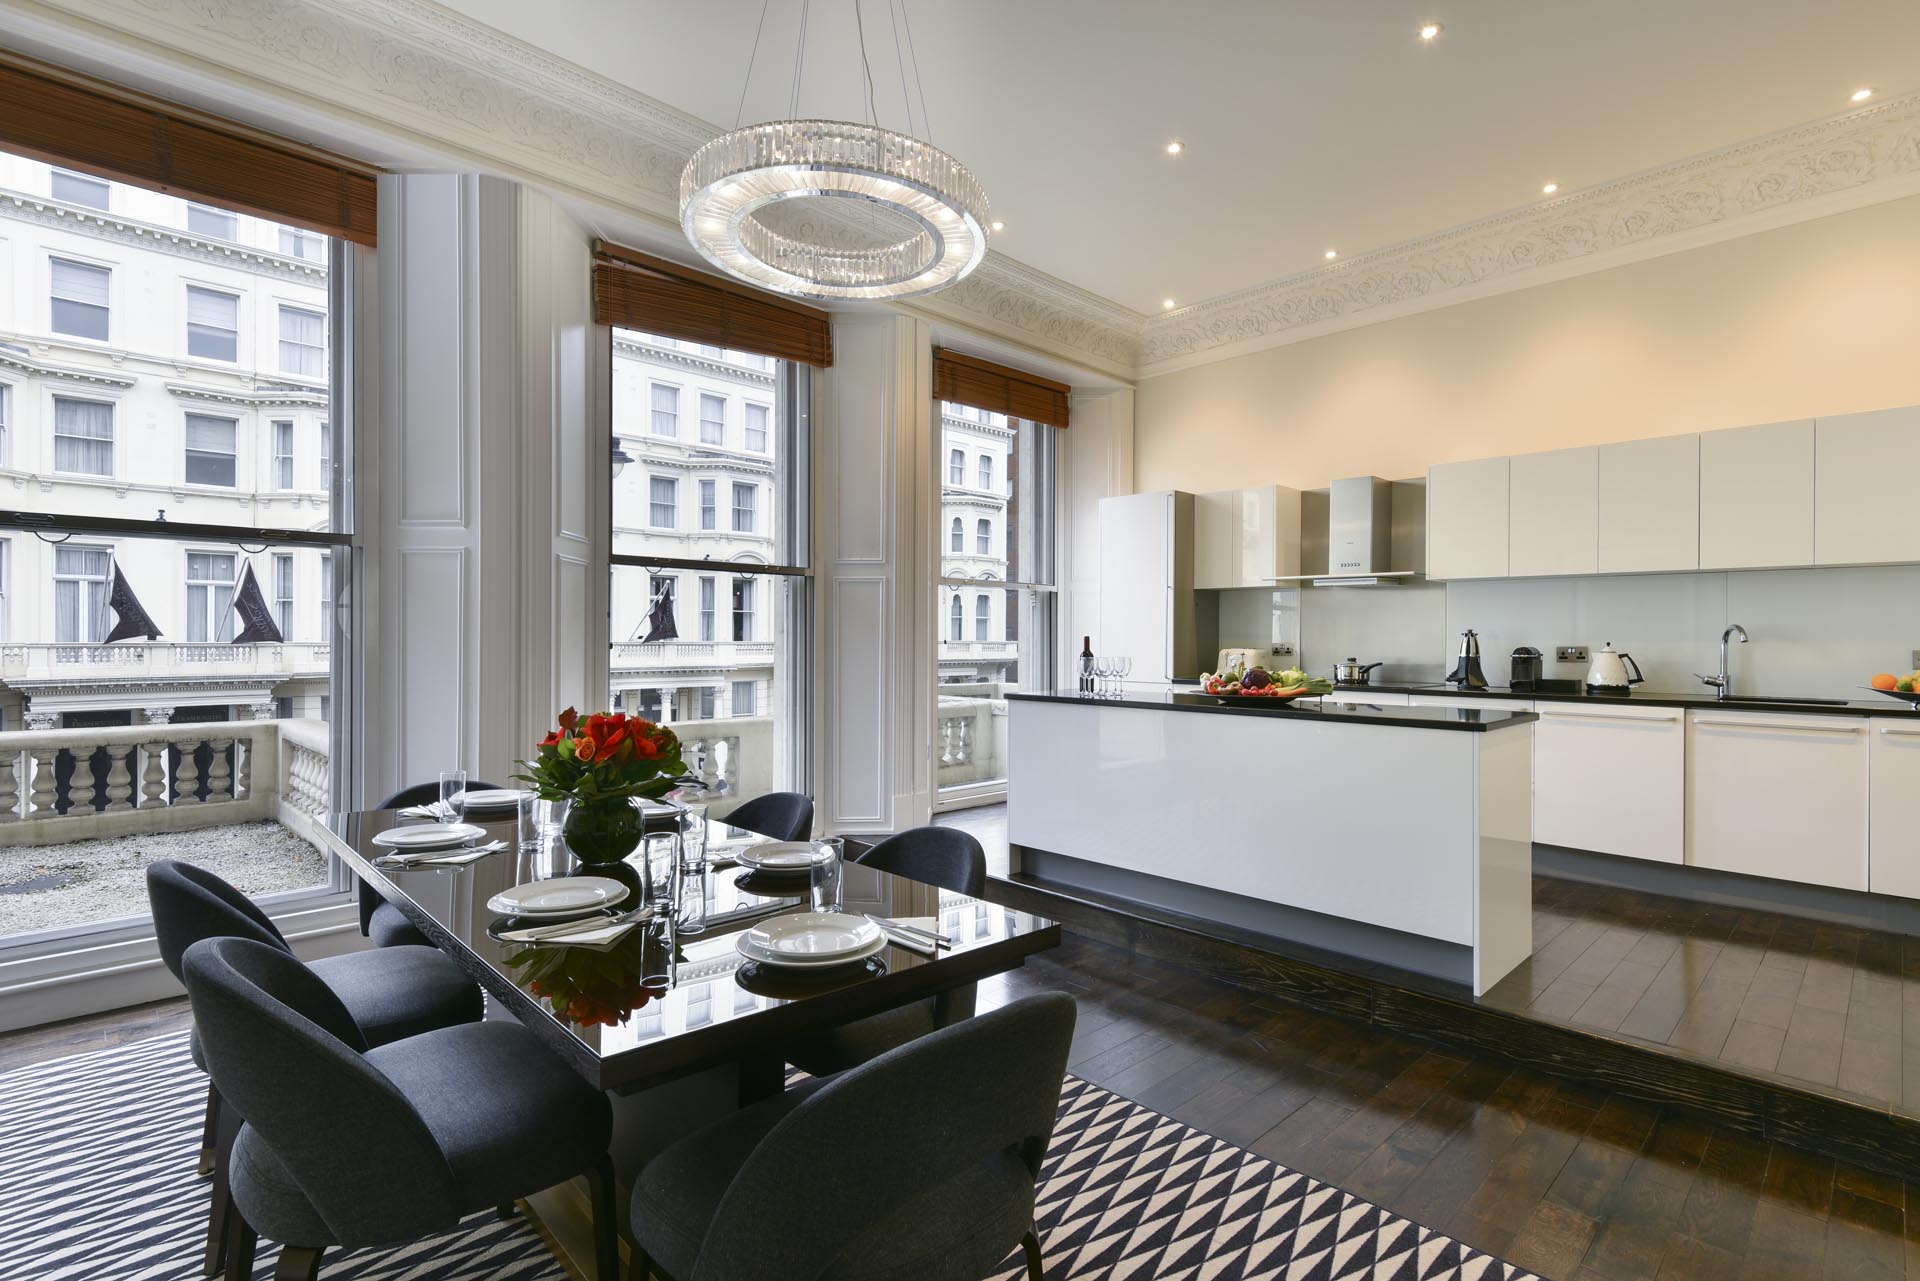 3 Bedroom Executive apartment at Fraser Suites Kensington, London